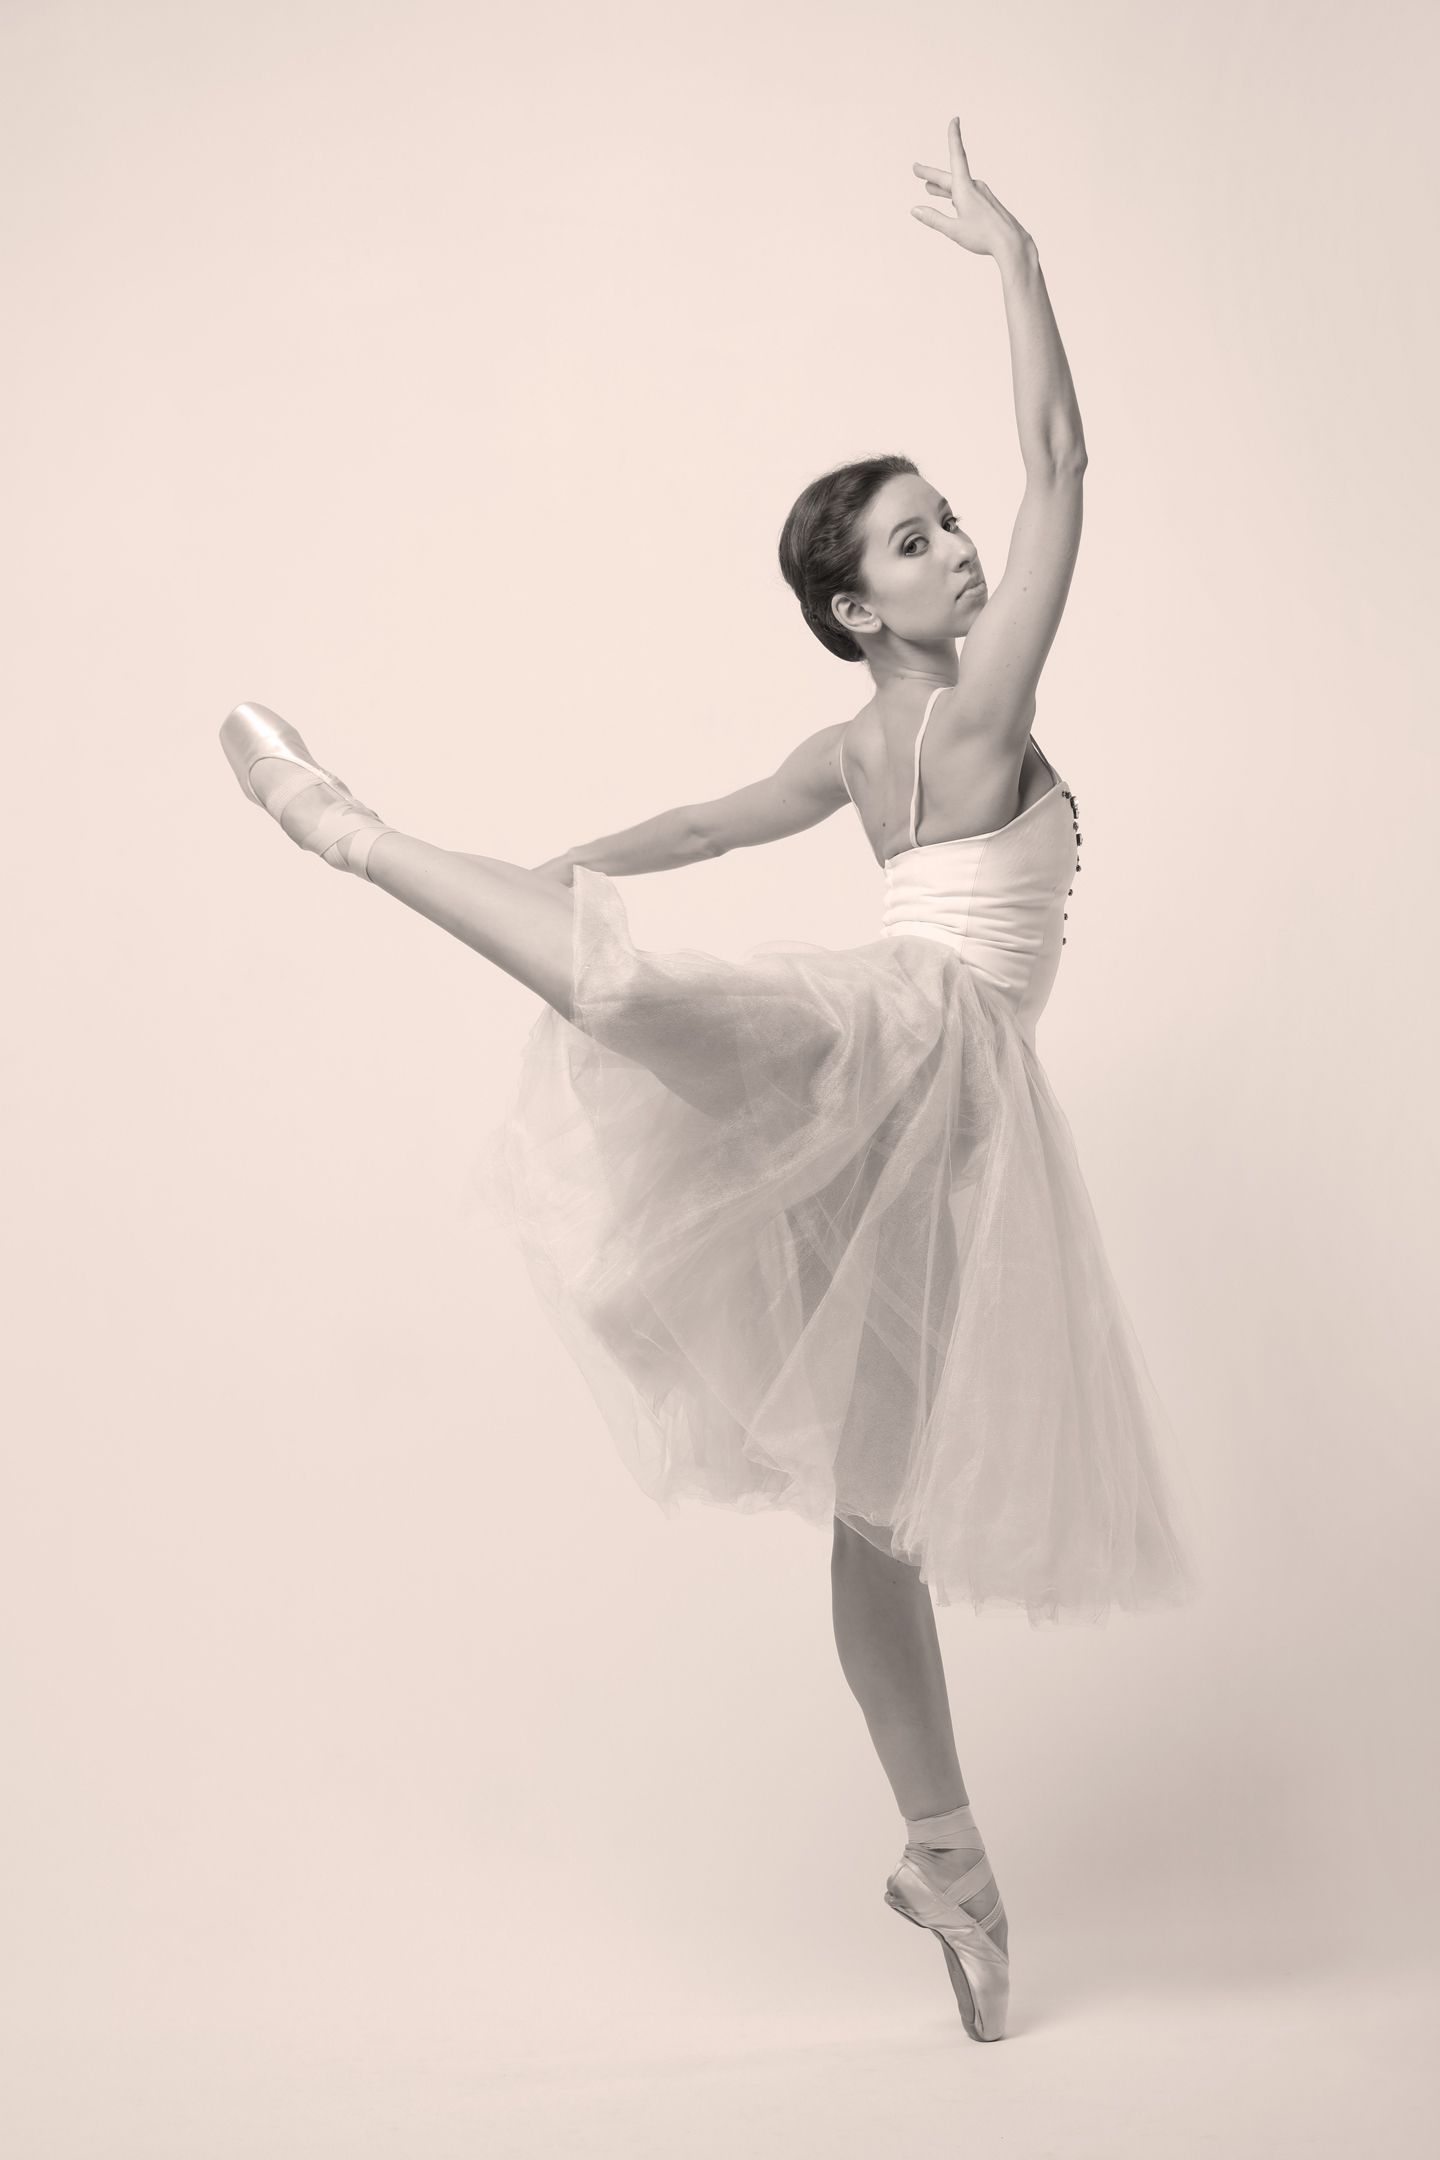 танец,балет,балерина, девушка, женщина, поза,dance,ballerina,female,woman,beauty., Олег Грачёв